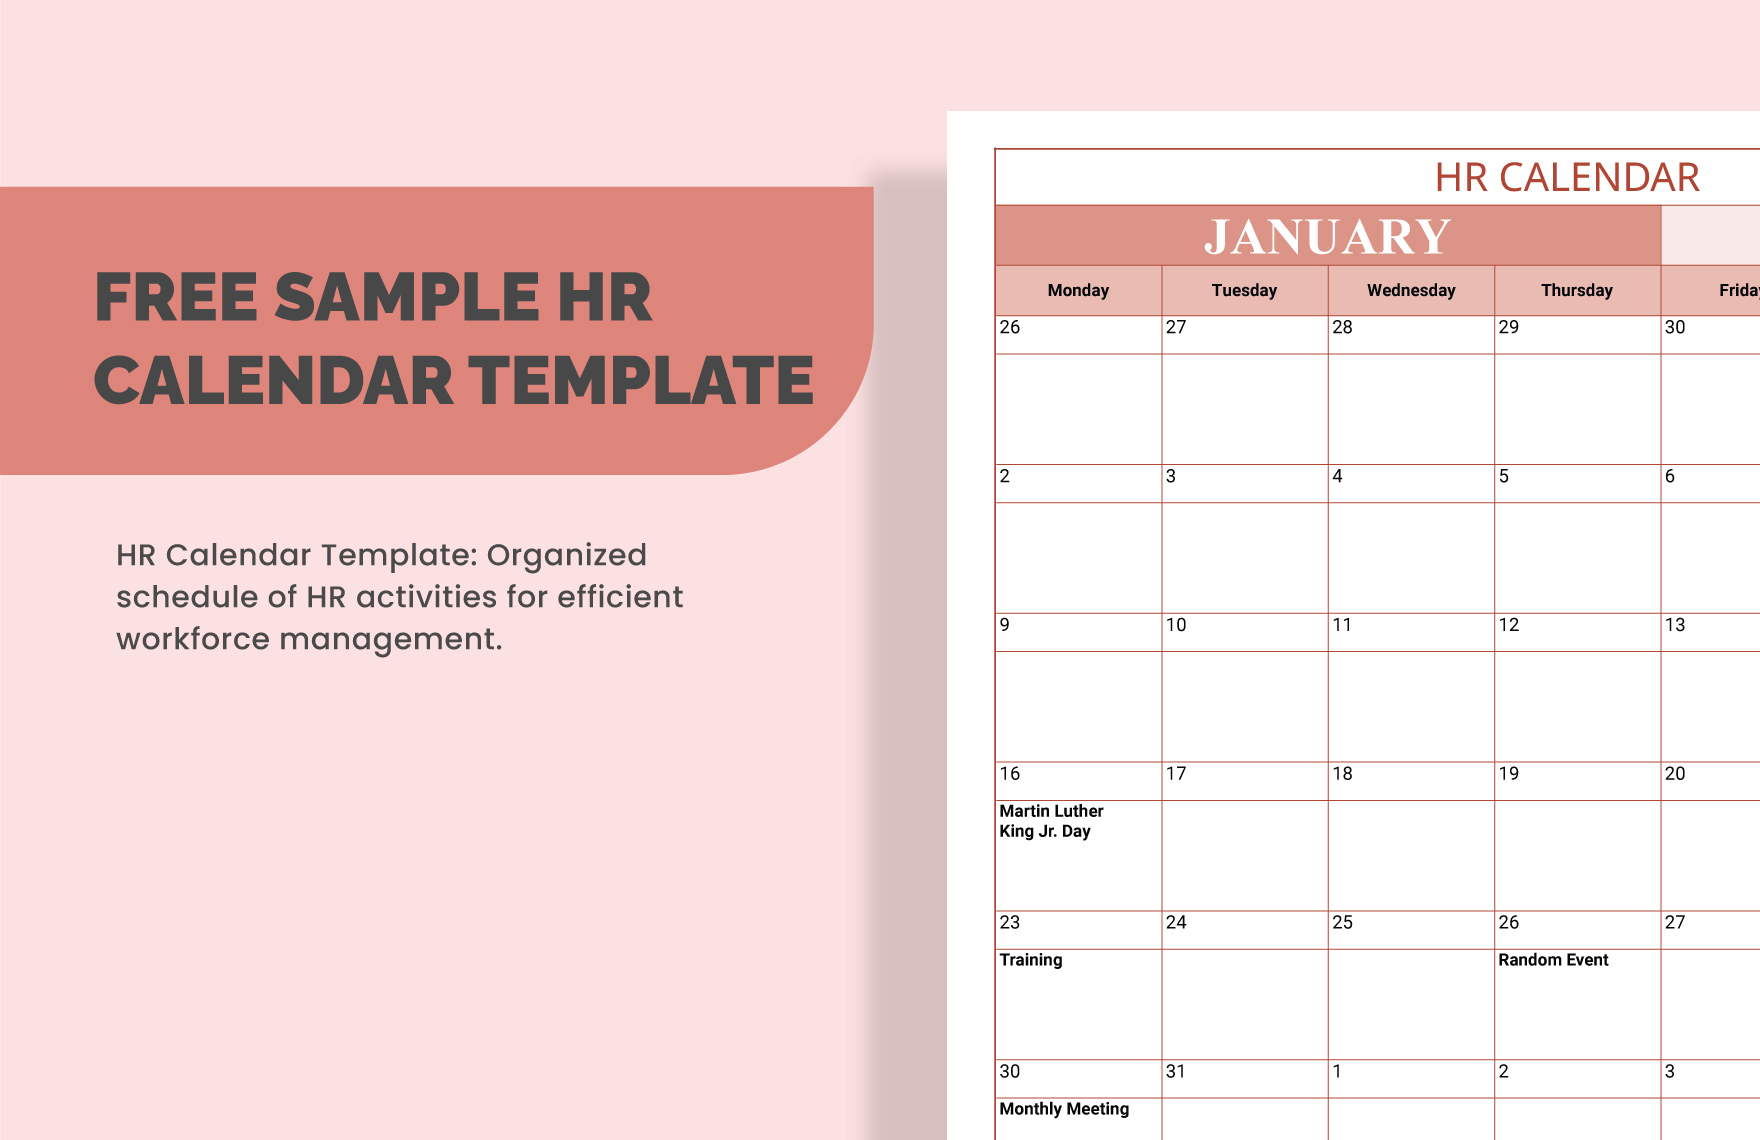 FREE HR Calendar Template Download in Word, Google Docs, Excel, PDF